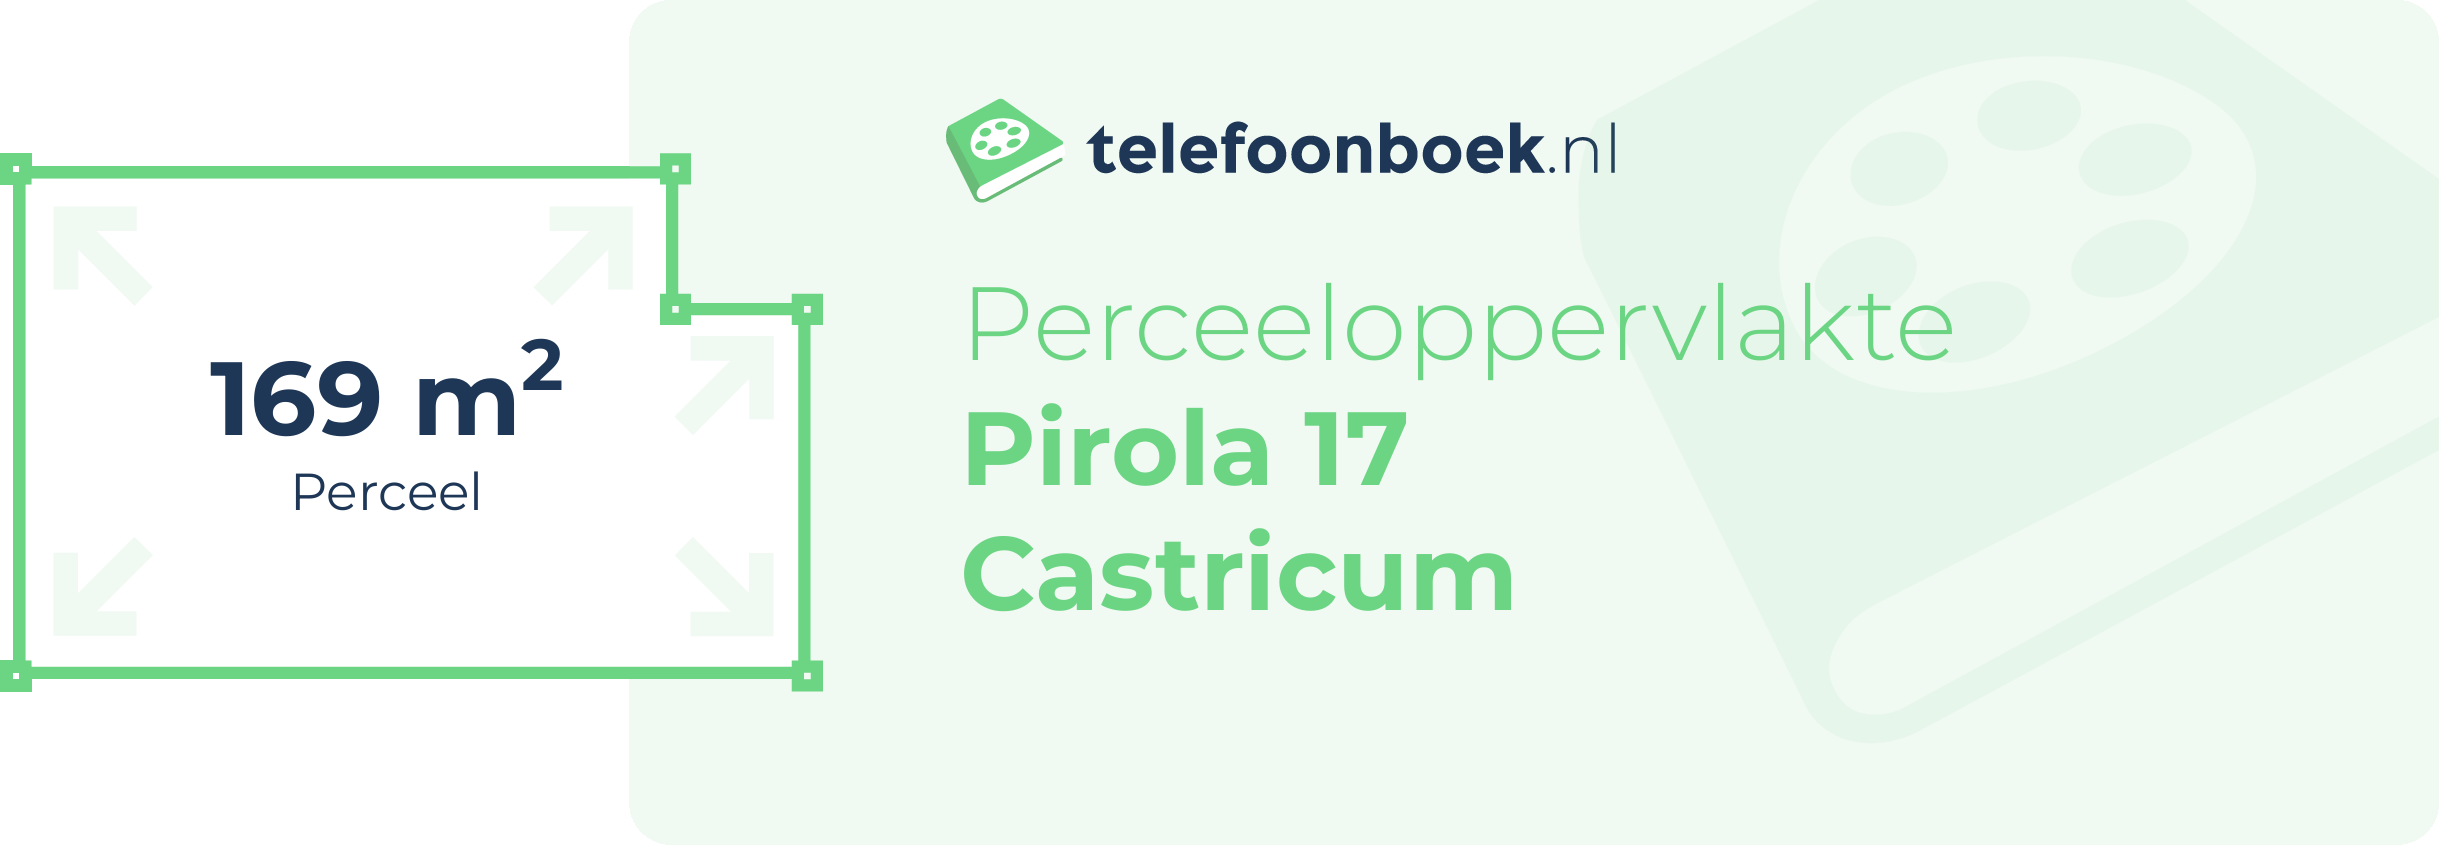 Perceeloppervlakte Pirola 17 Castricum